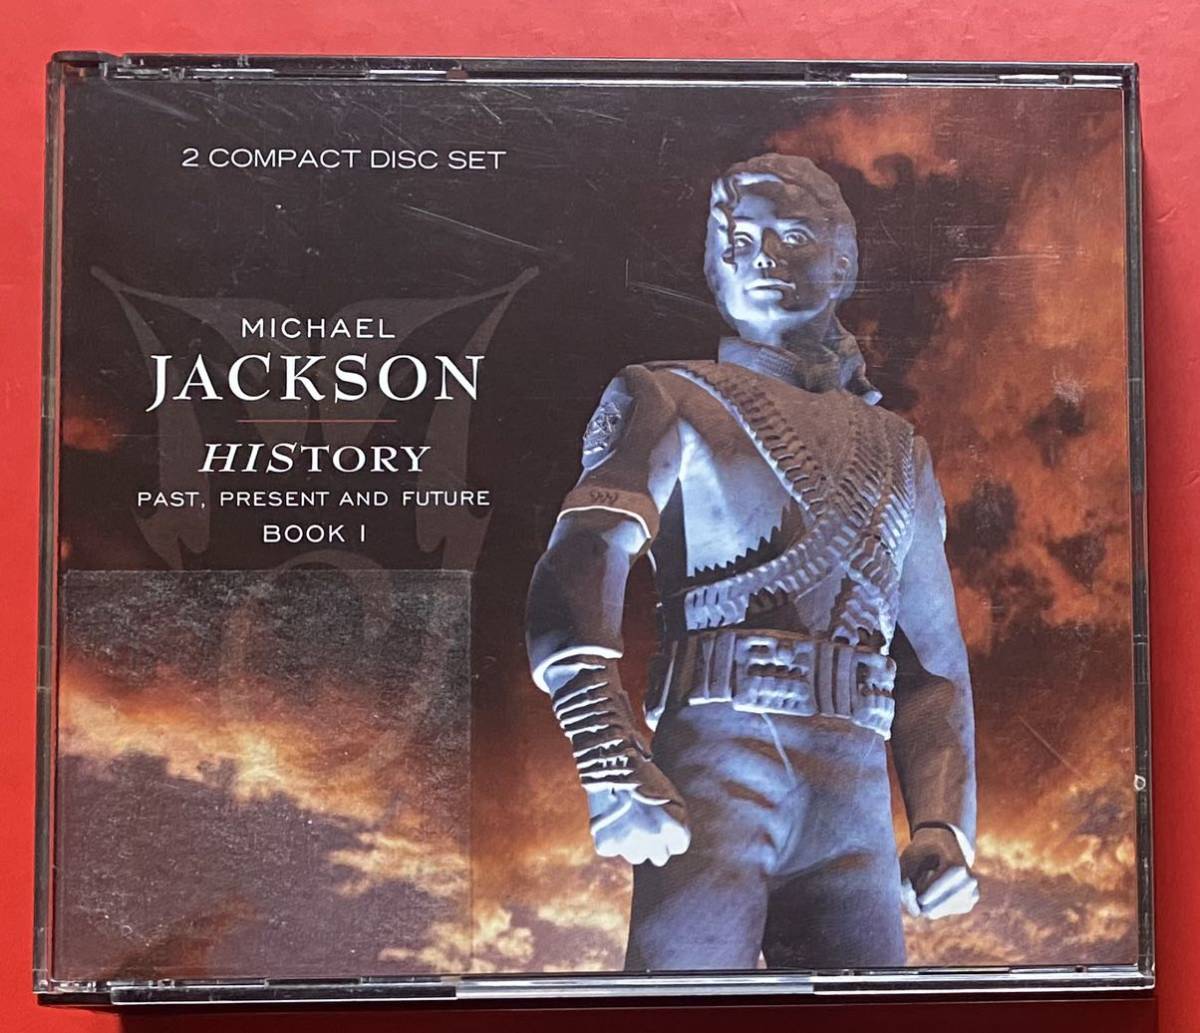 [2CD]MICHAEL JACKSON[HISTORY PAST, PRESENT AND FUTURE BOOK Ⅰ] Michael * Jackson зарубежная запись [12170132]